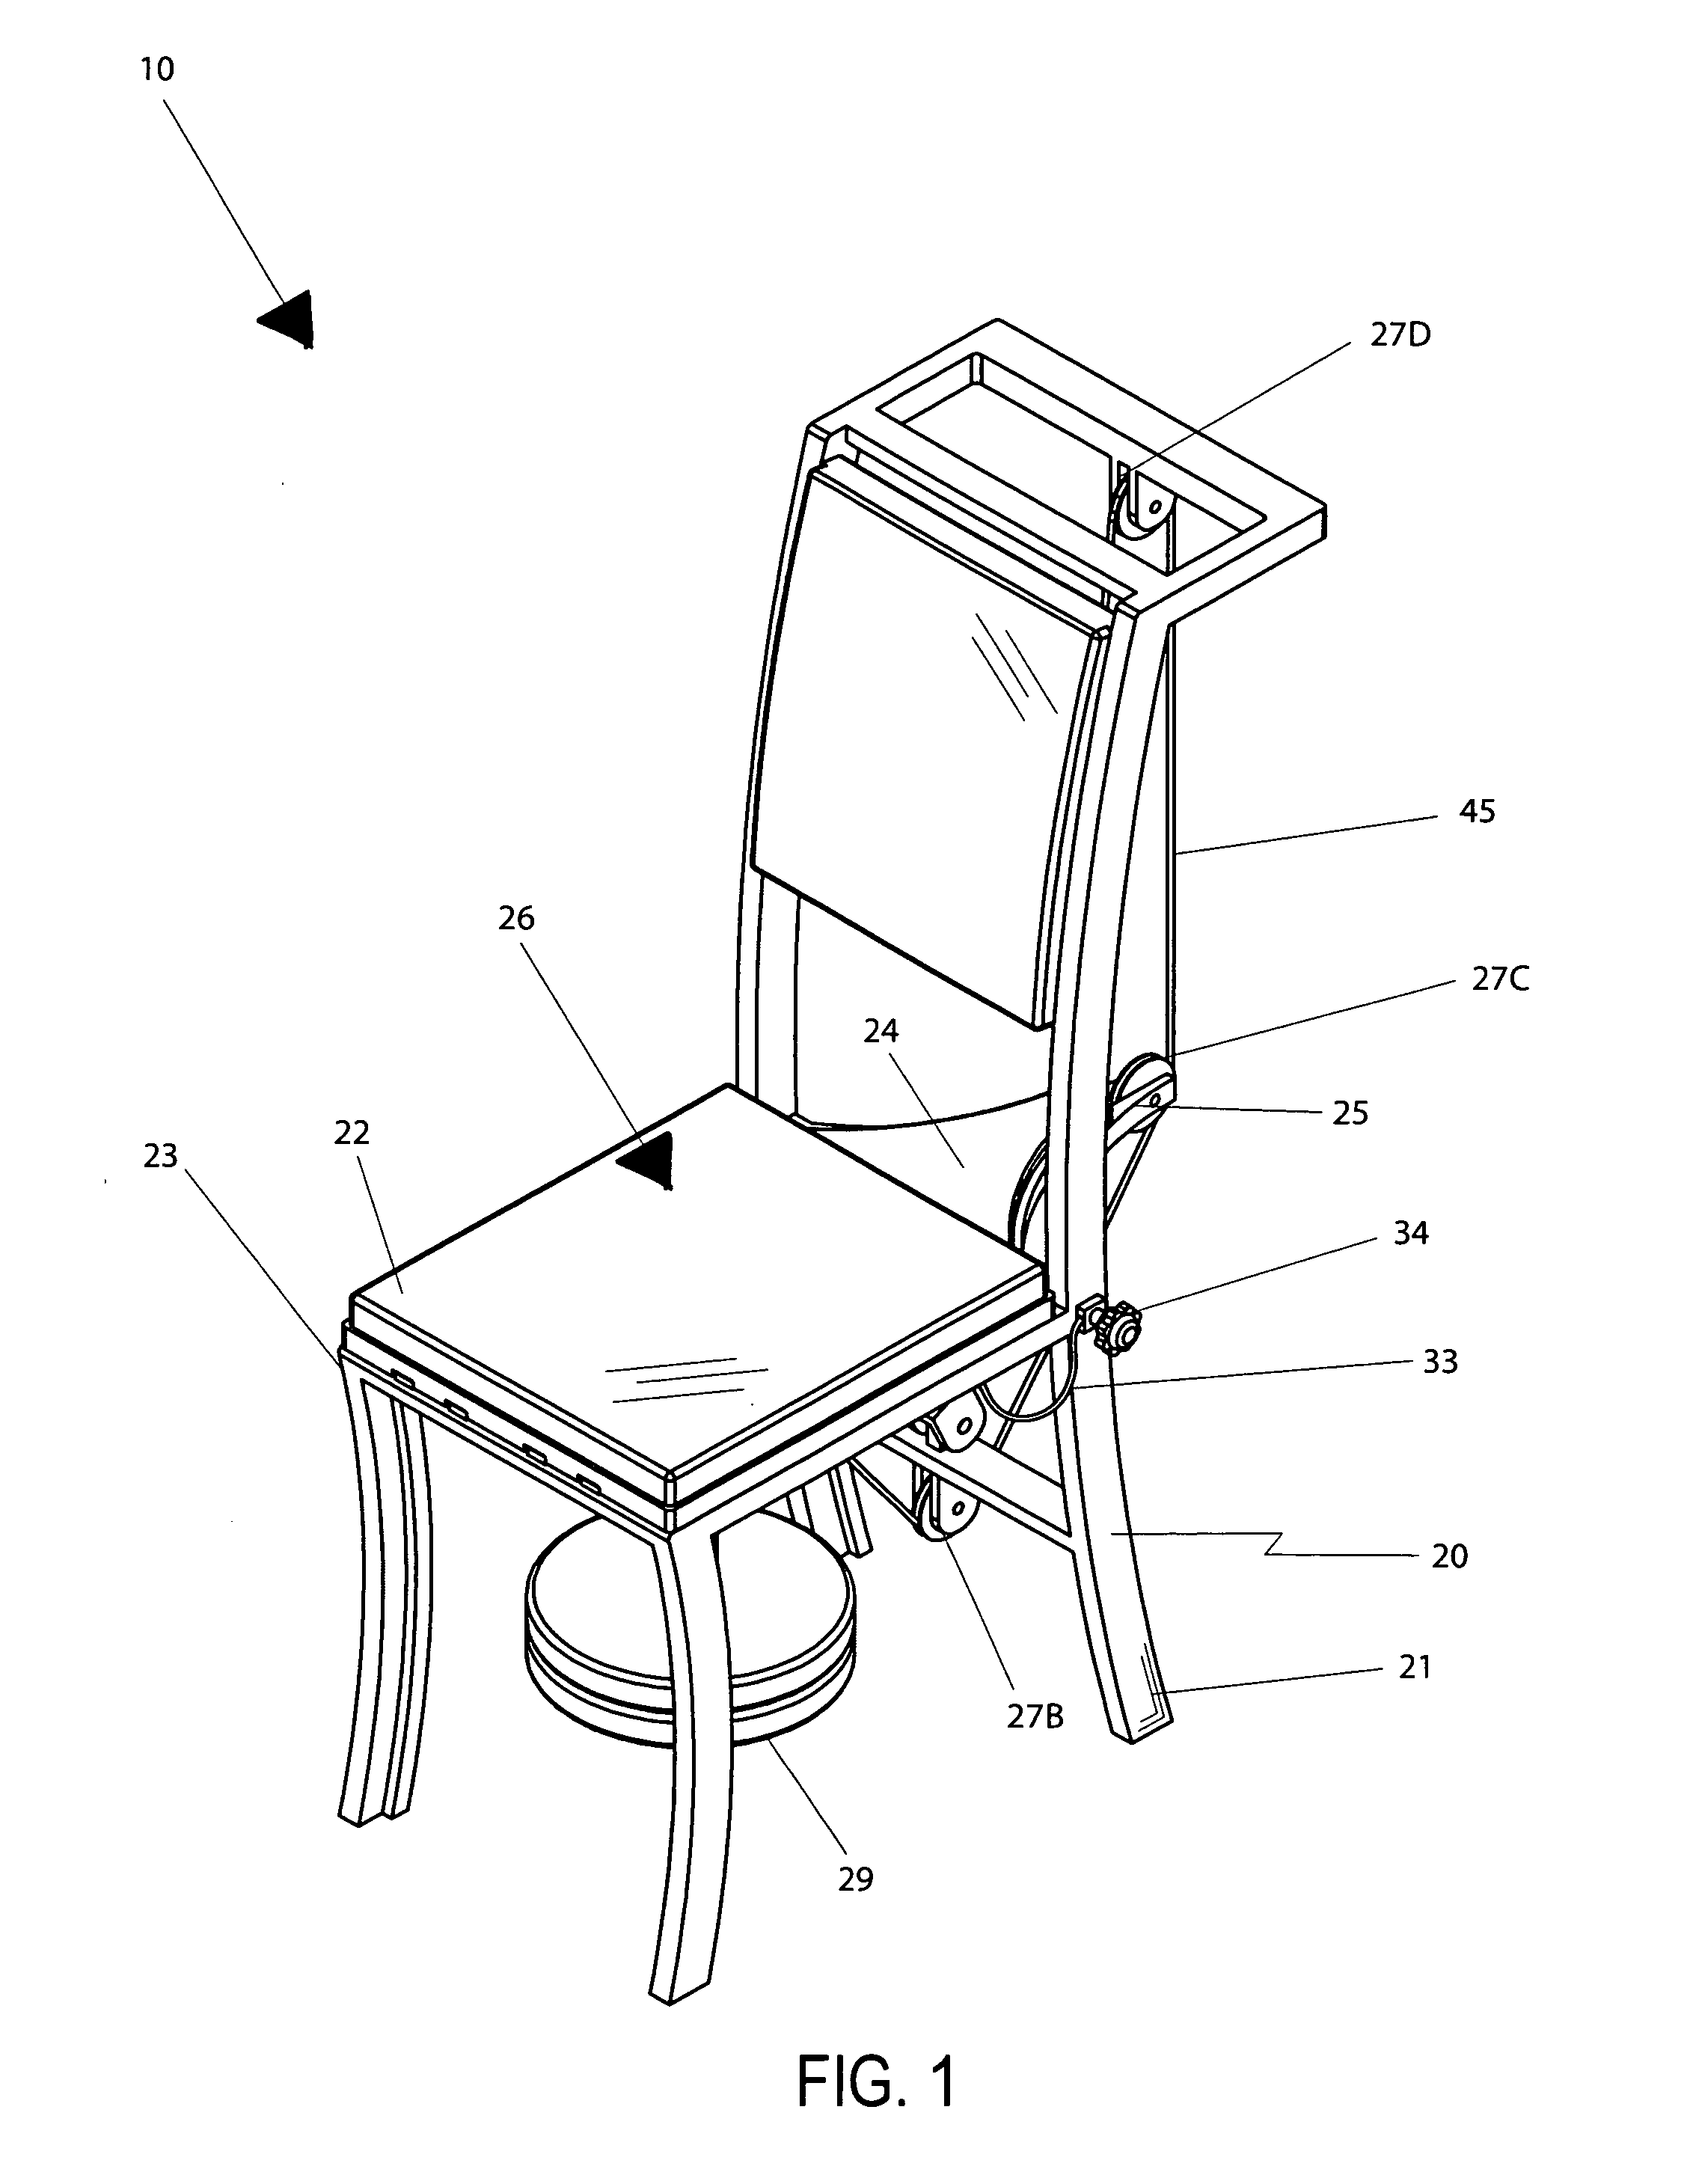 Combination ergonomic chair and seat pivoting mechanism